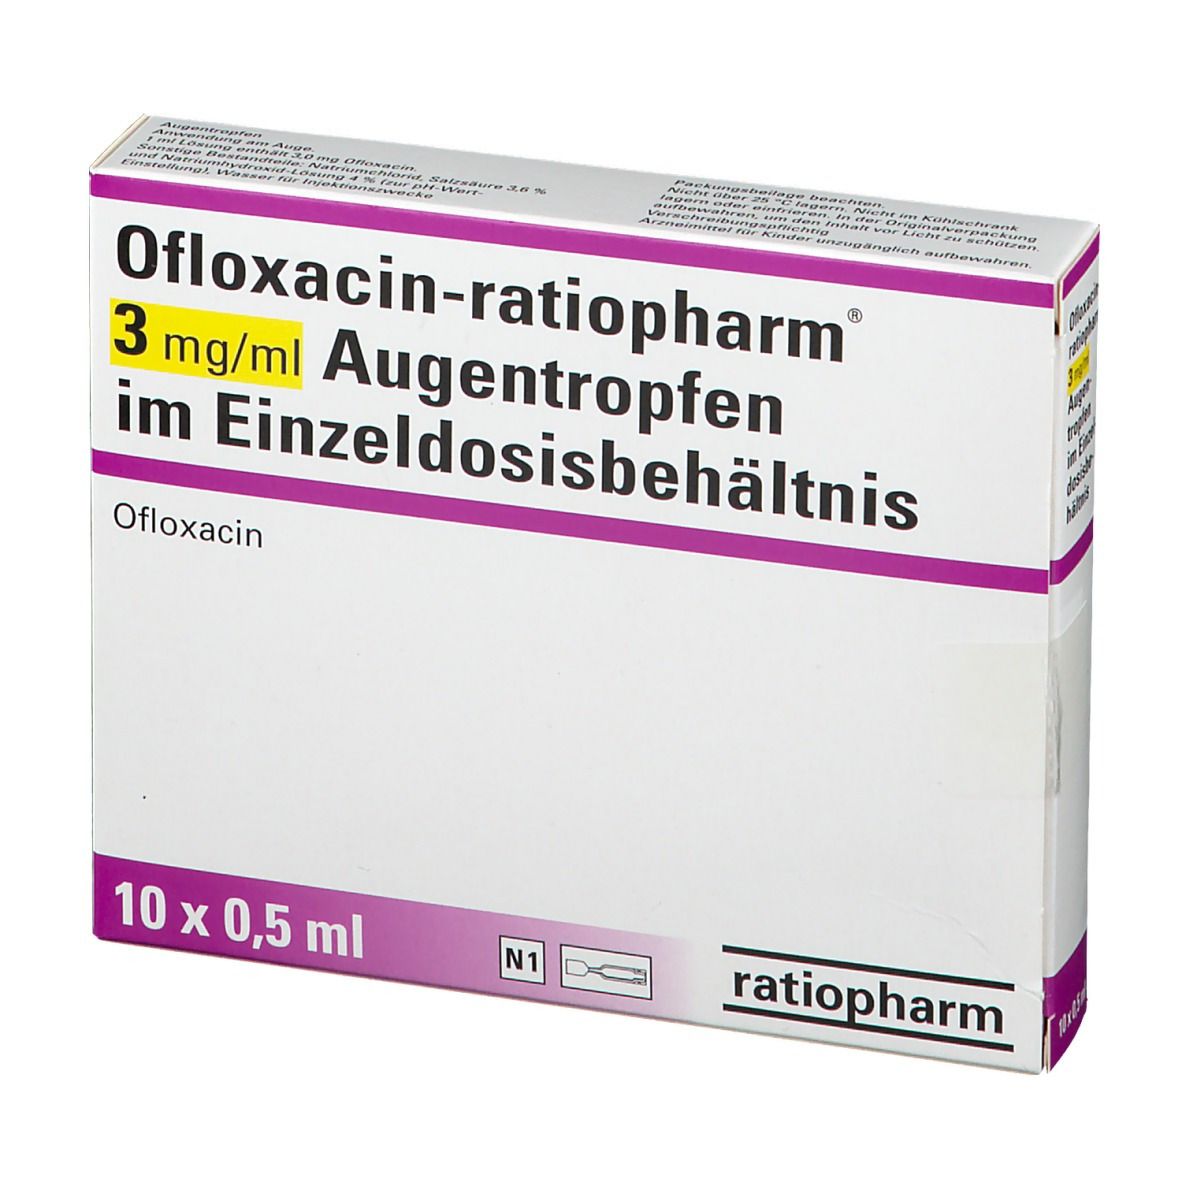 Ofloxacin-ratiopharm® 3 mg/ml